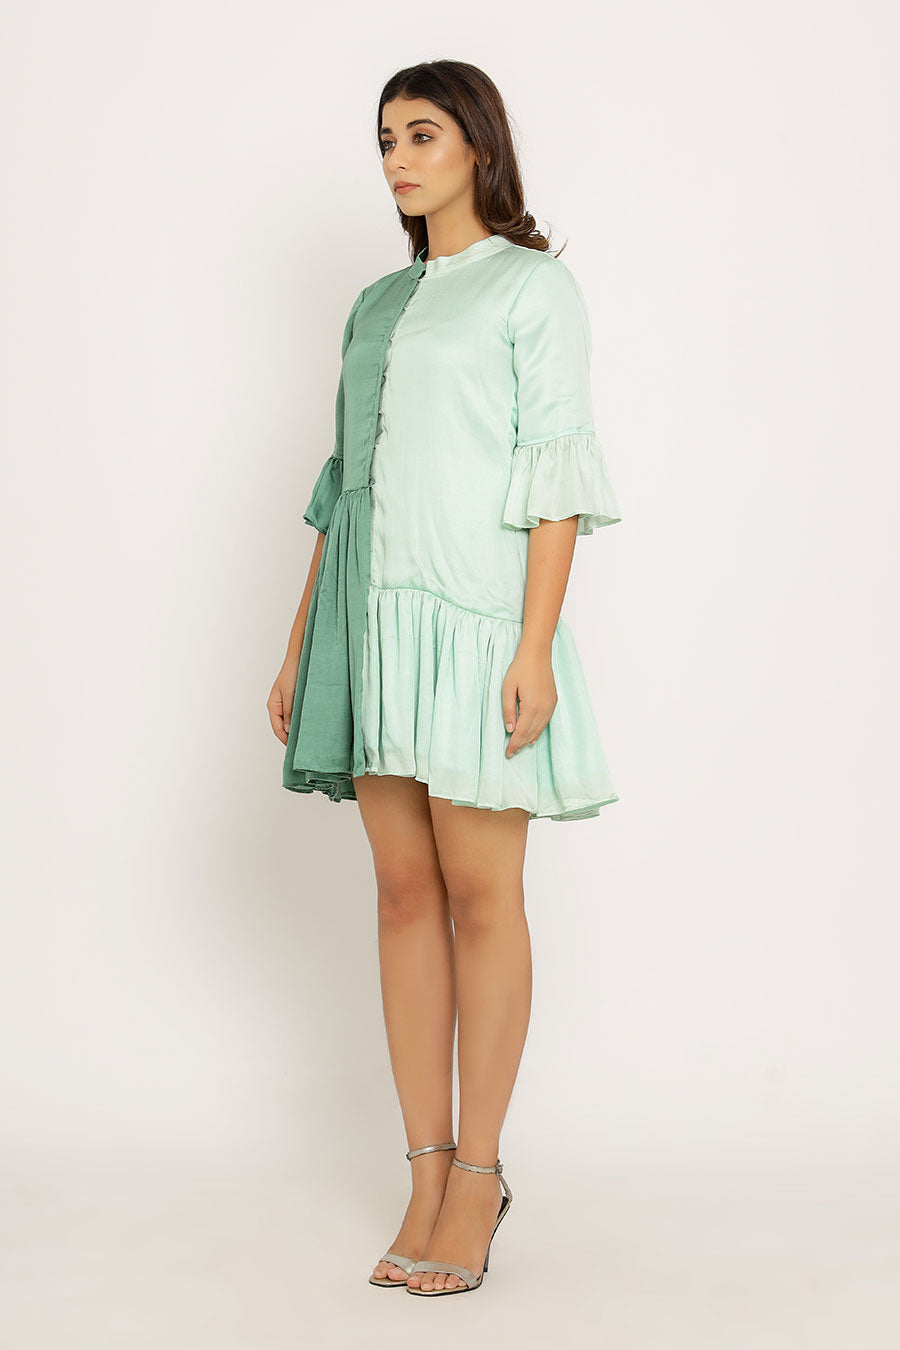 Teal & Tea Green Half & Half Short Dress